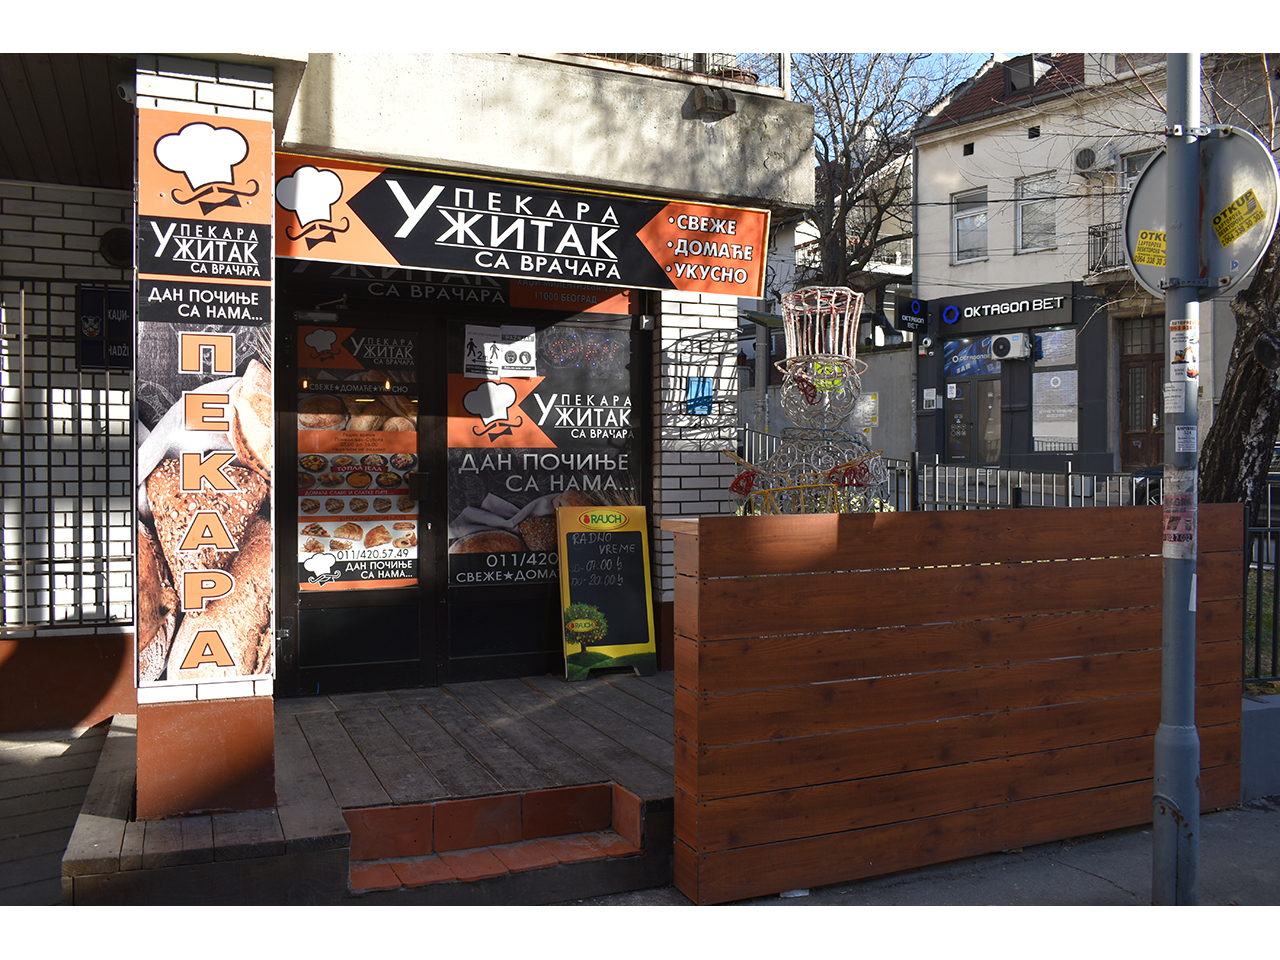 Photo 1 - BAKERY UZITAK VRACARA Pies, pie shops Belgrade